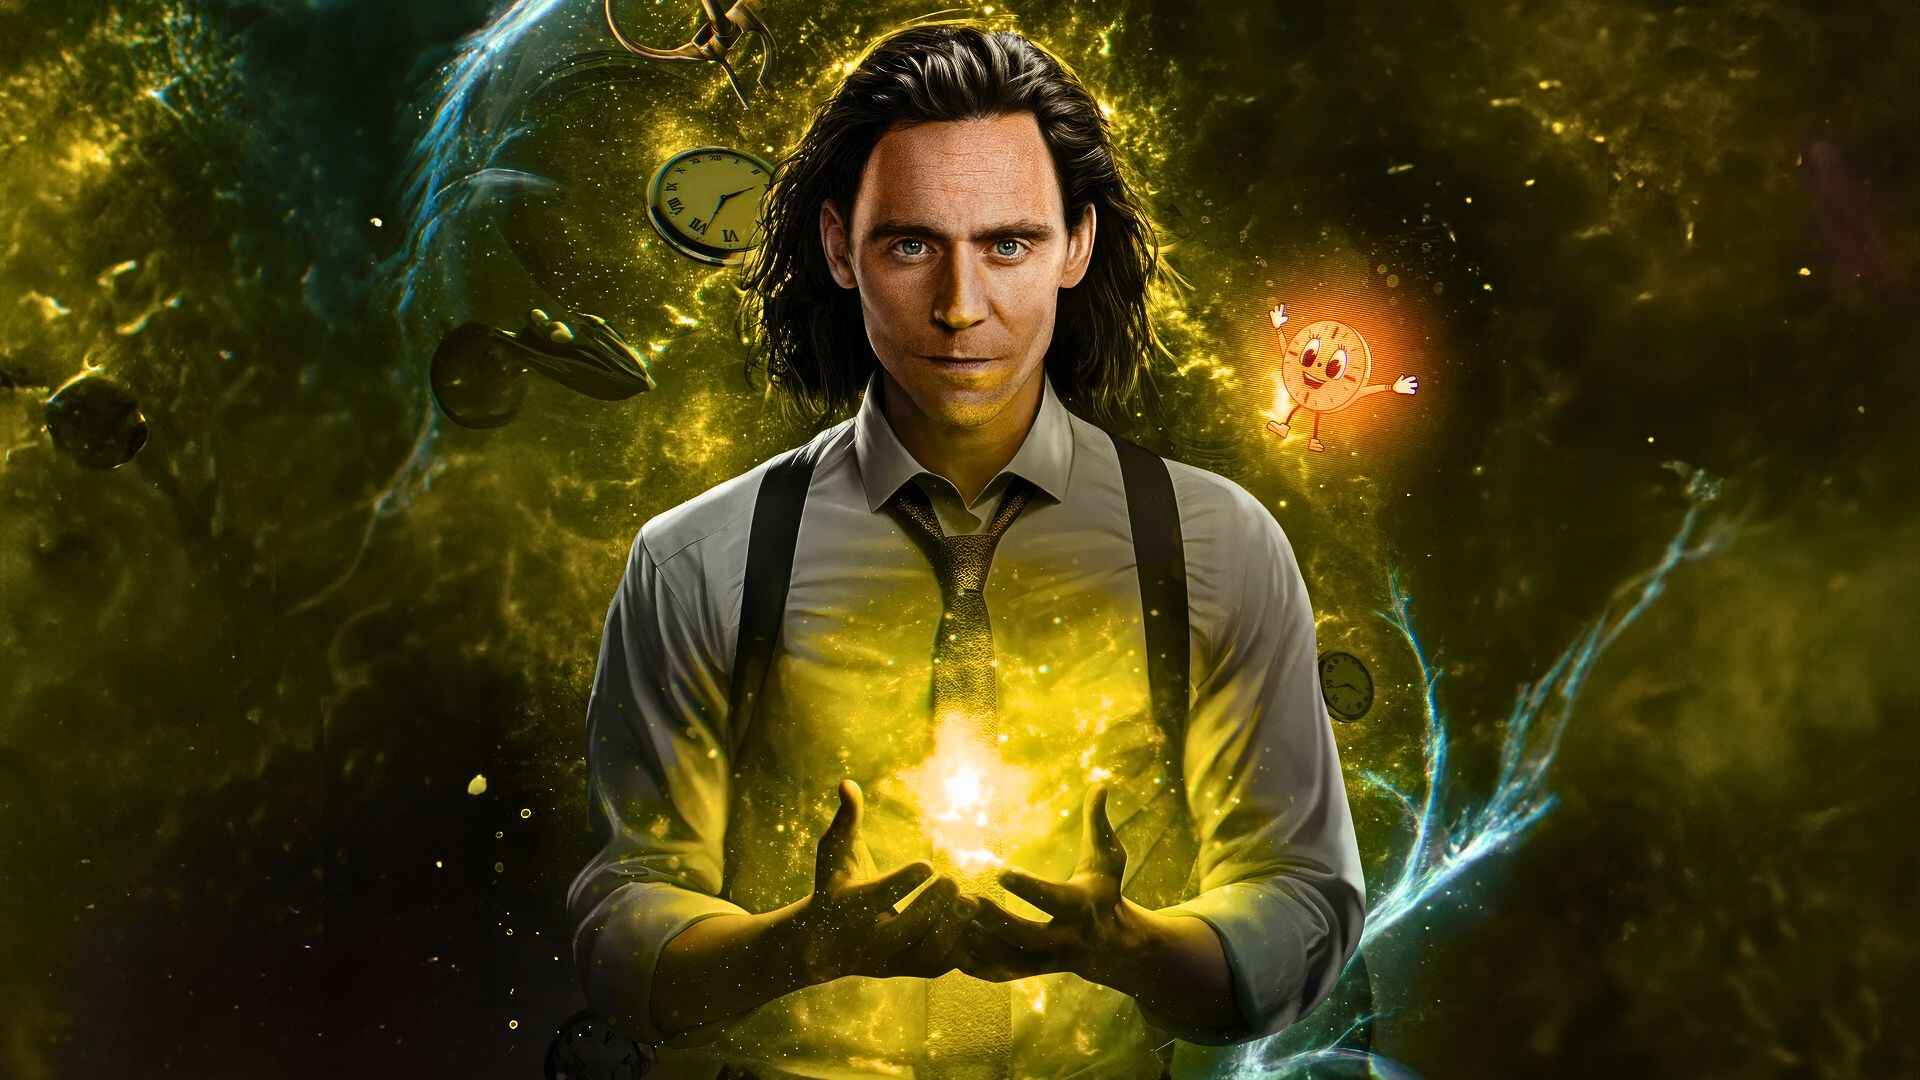 Best Loki Season 2 Wallpaper